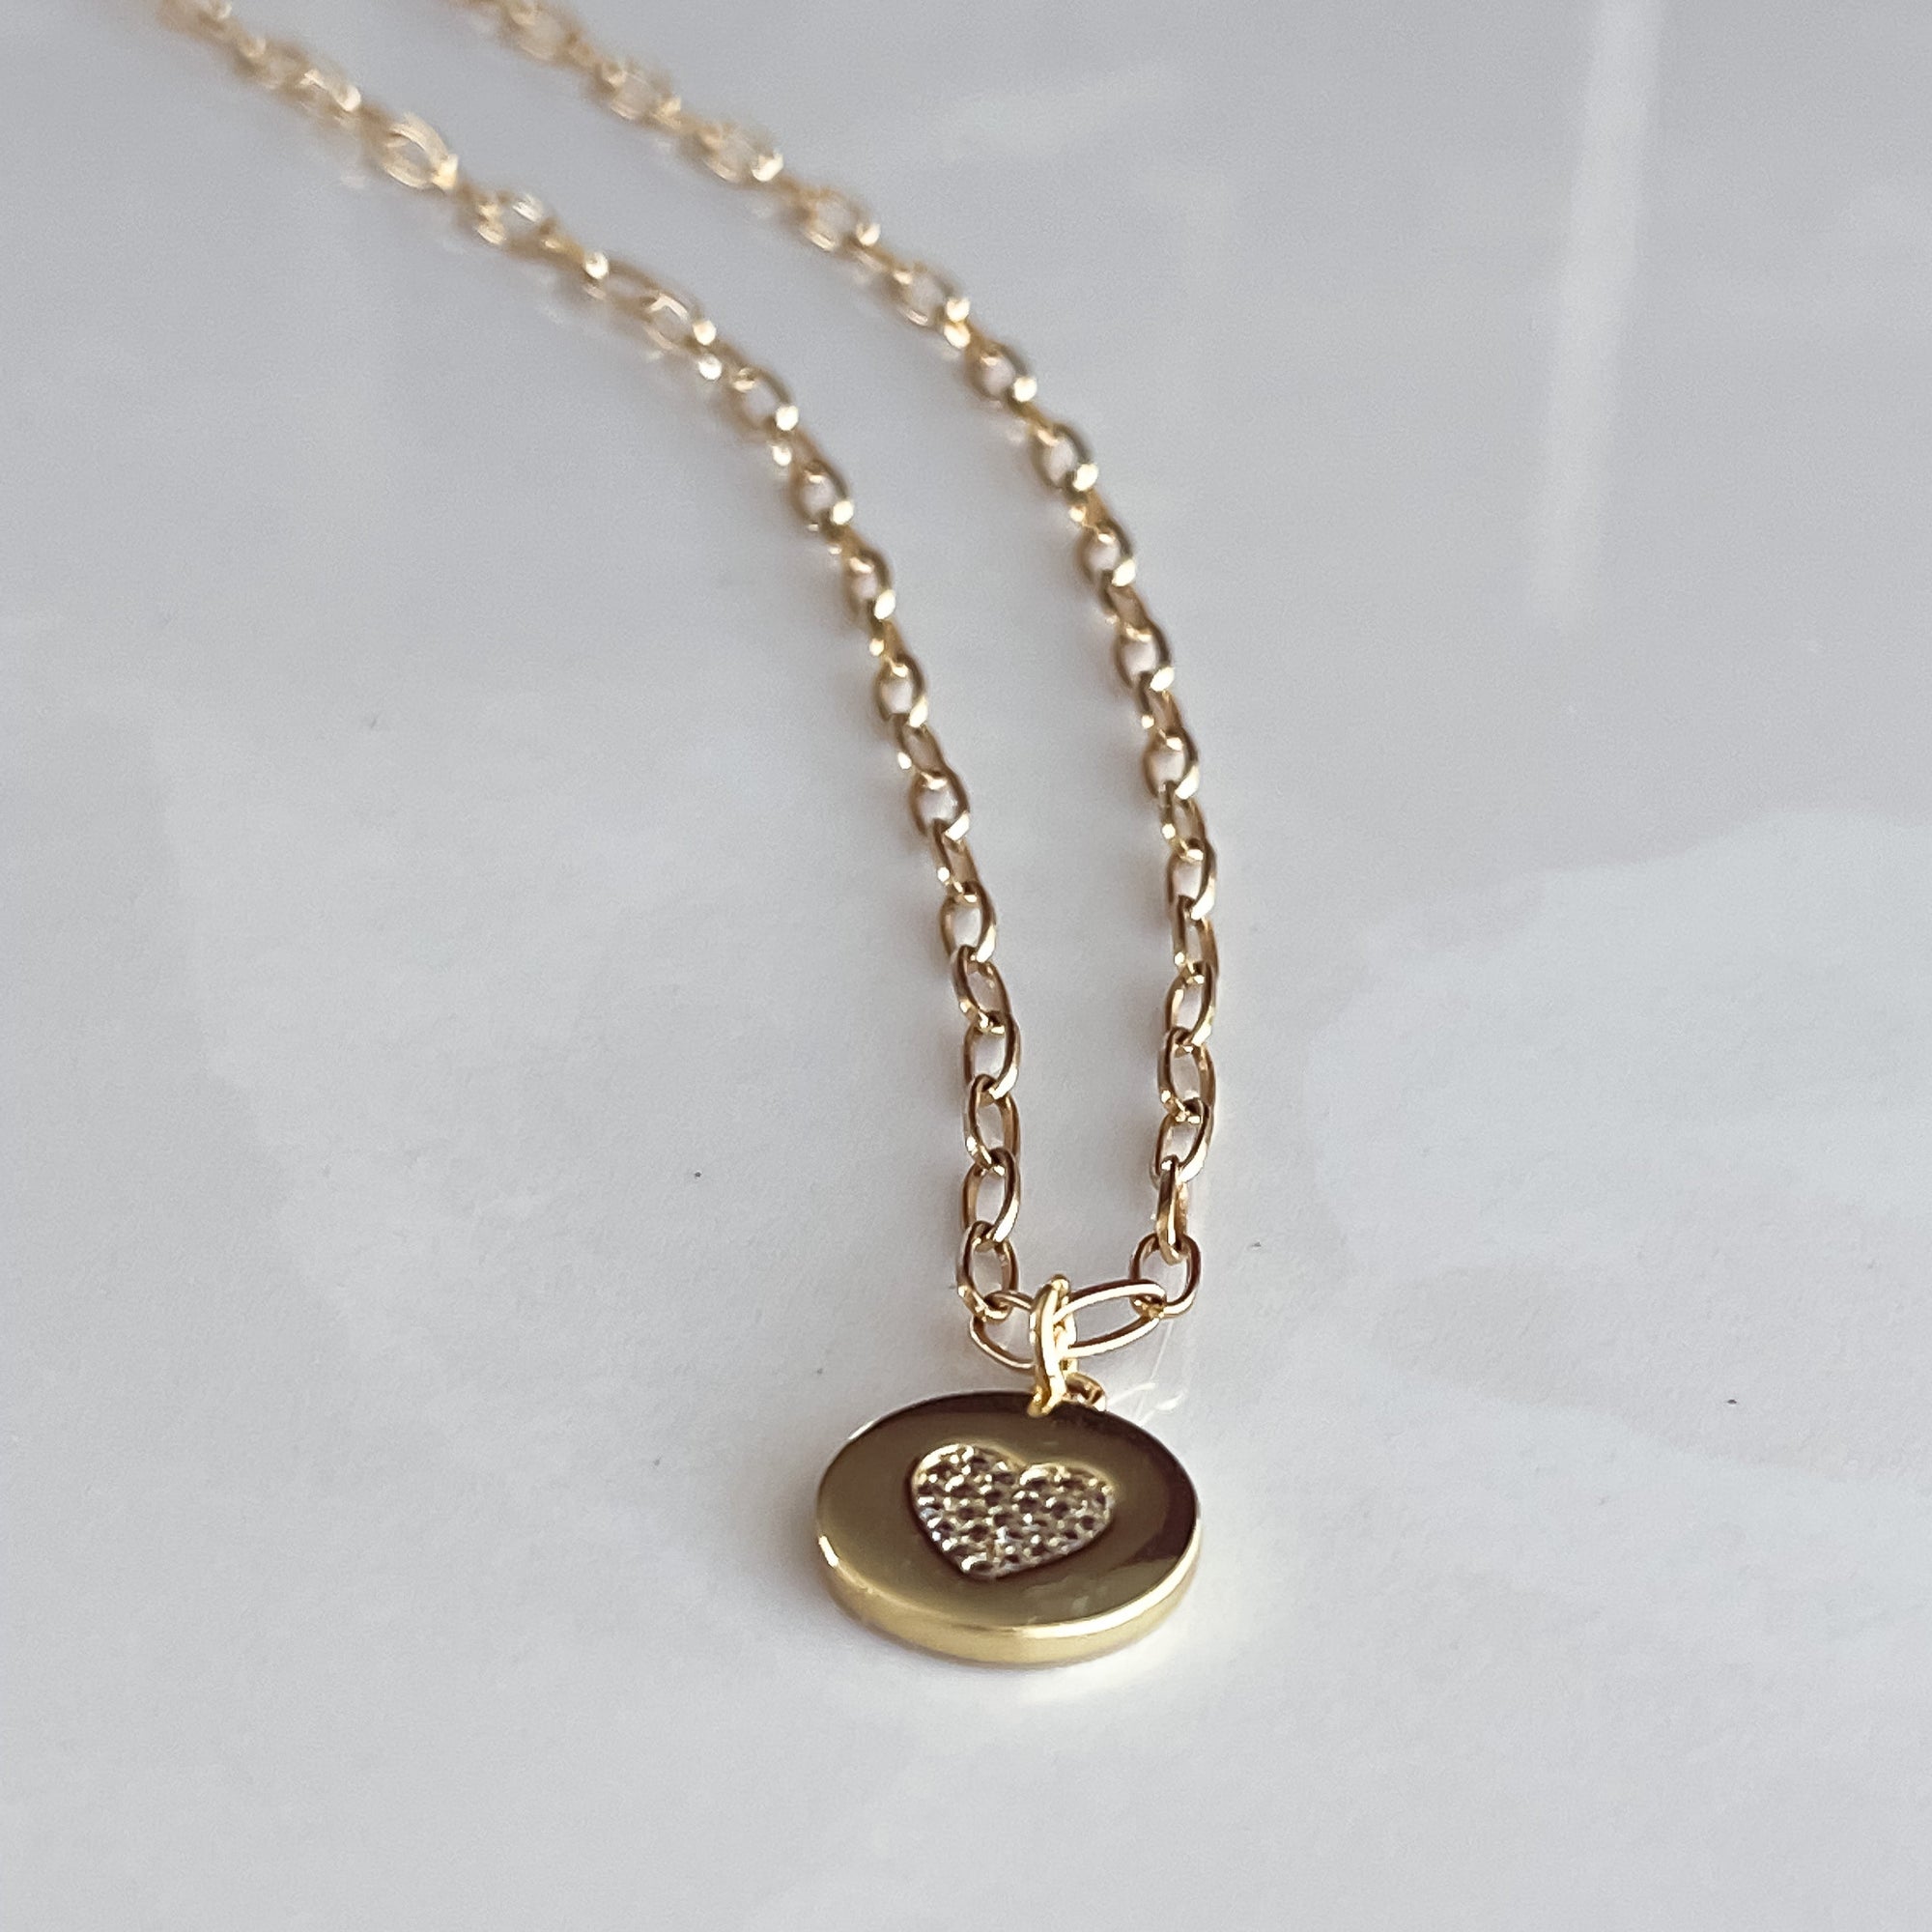 Endless Love Mini Heart Charm - White - Idalia Baudo Jewelry